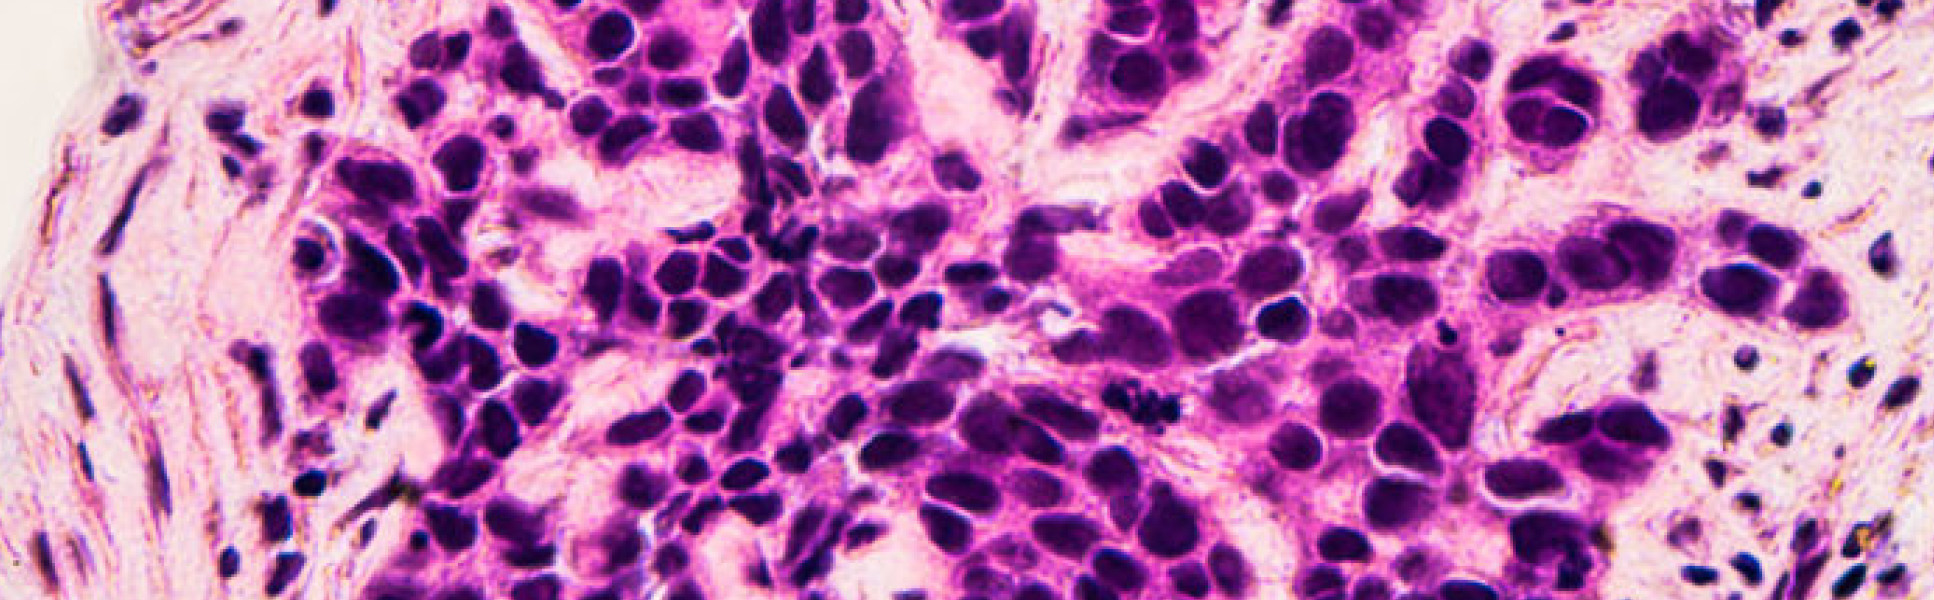 Biopsy of breast cancer